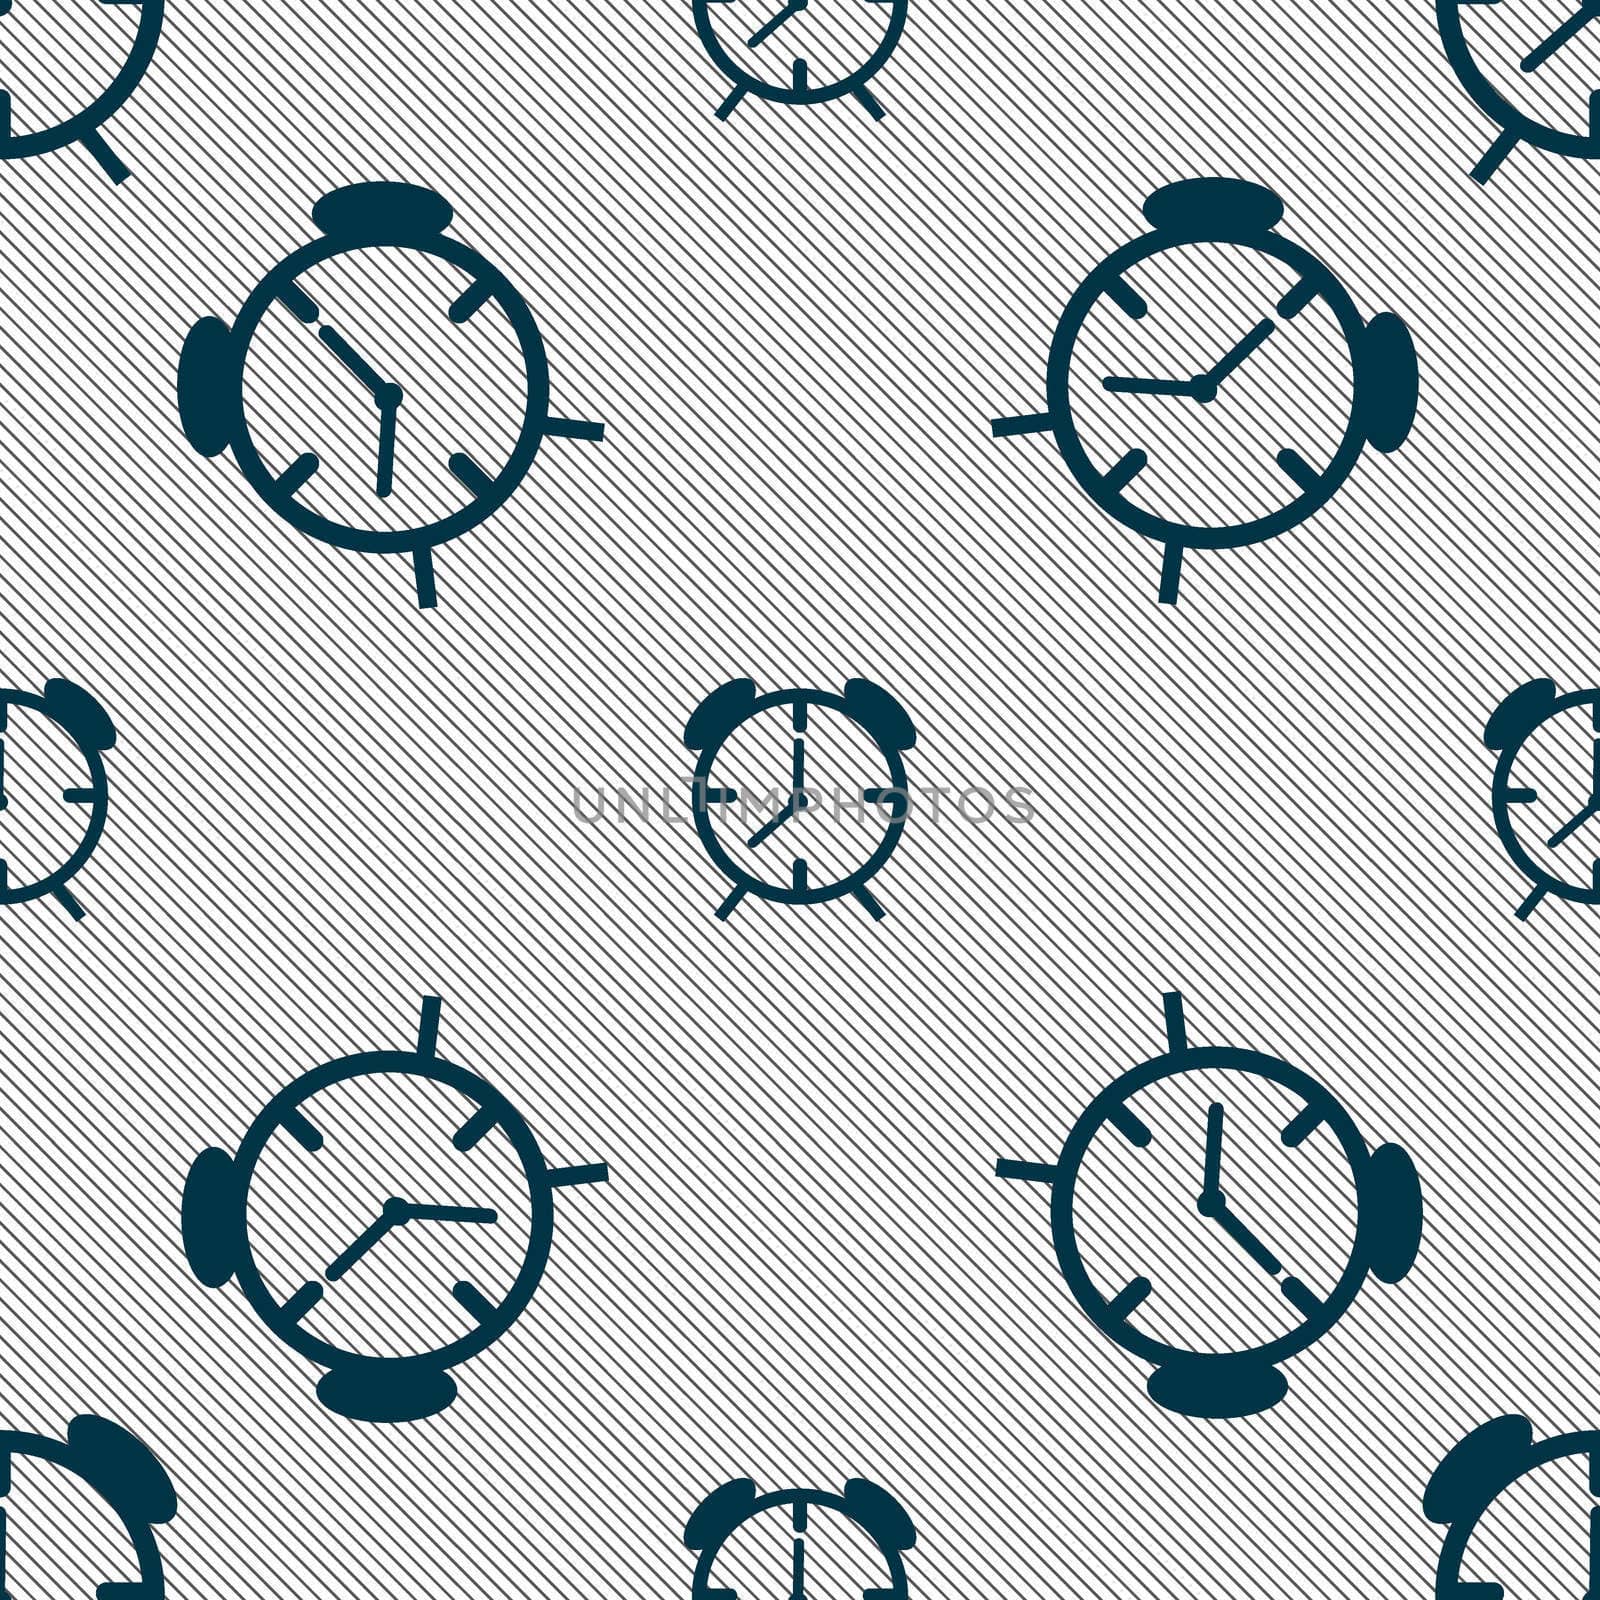 Alarm clock sign icon. Wake up alarm symbol. Seamless pattern with geometric texture. illustration